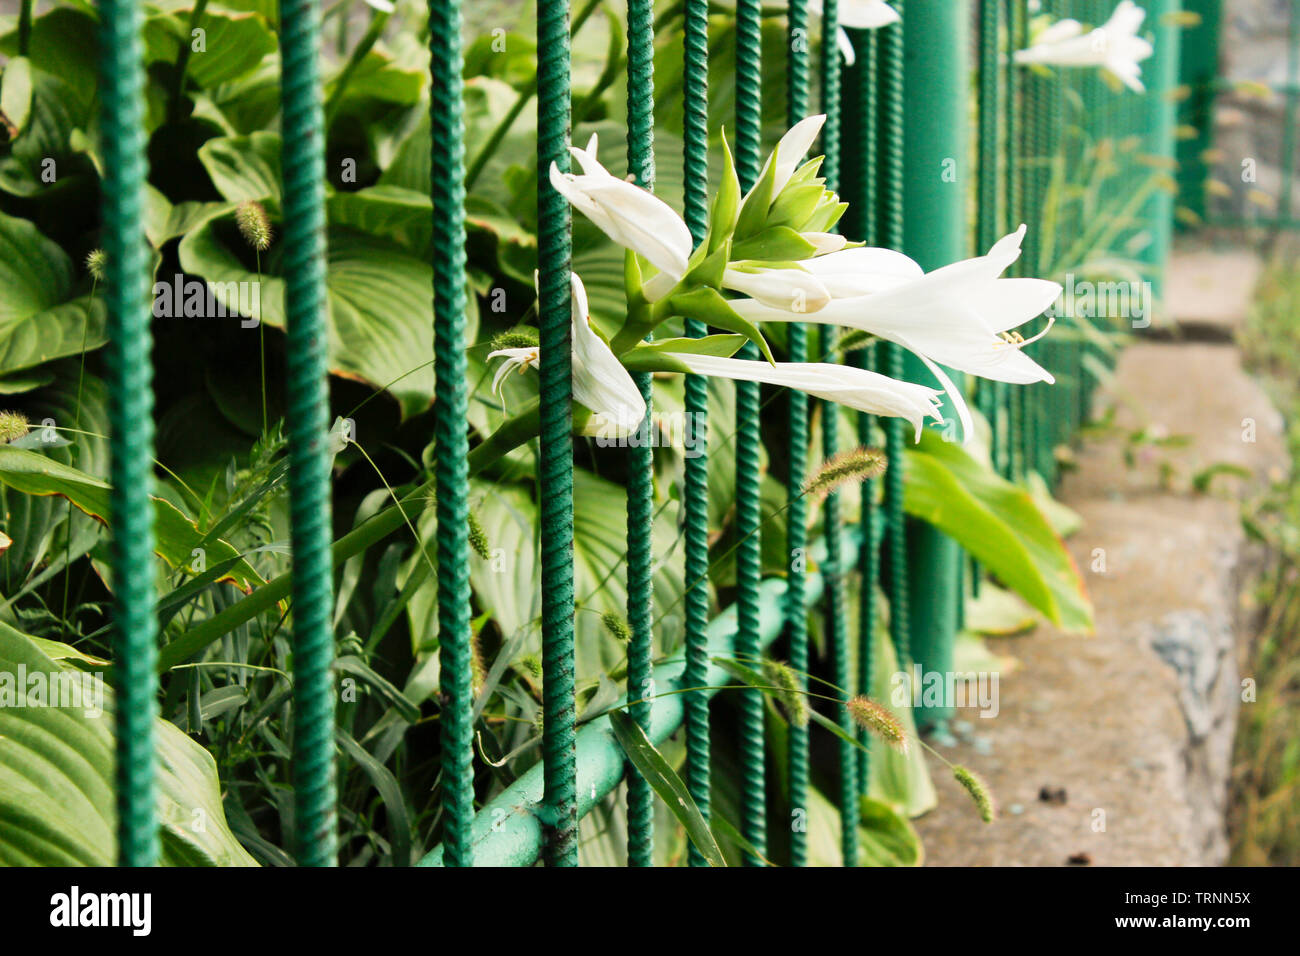 Green hosta plantaginea is blooming in a gsrden Stock Photo